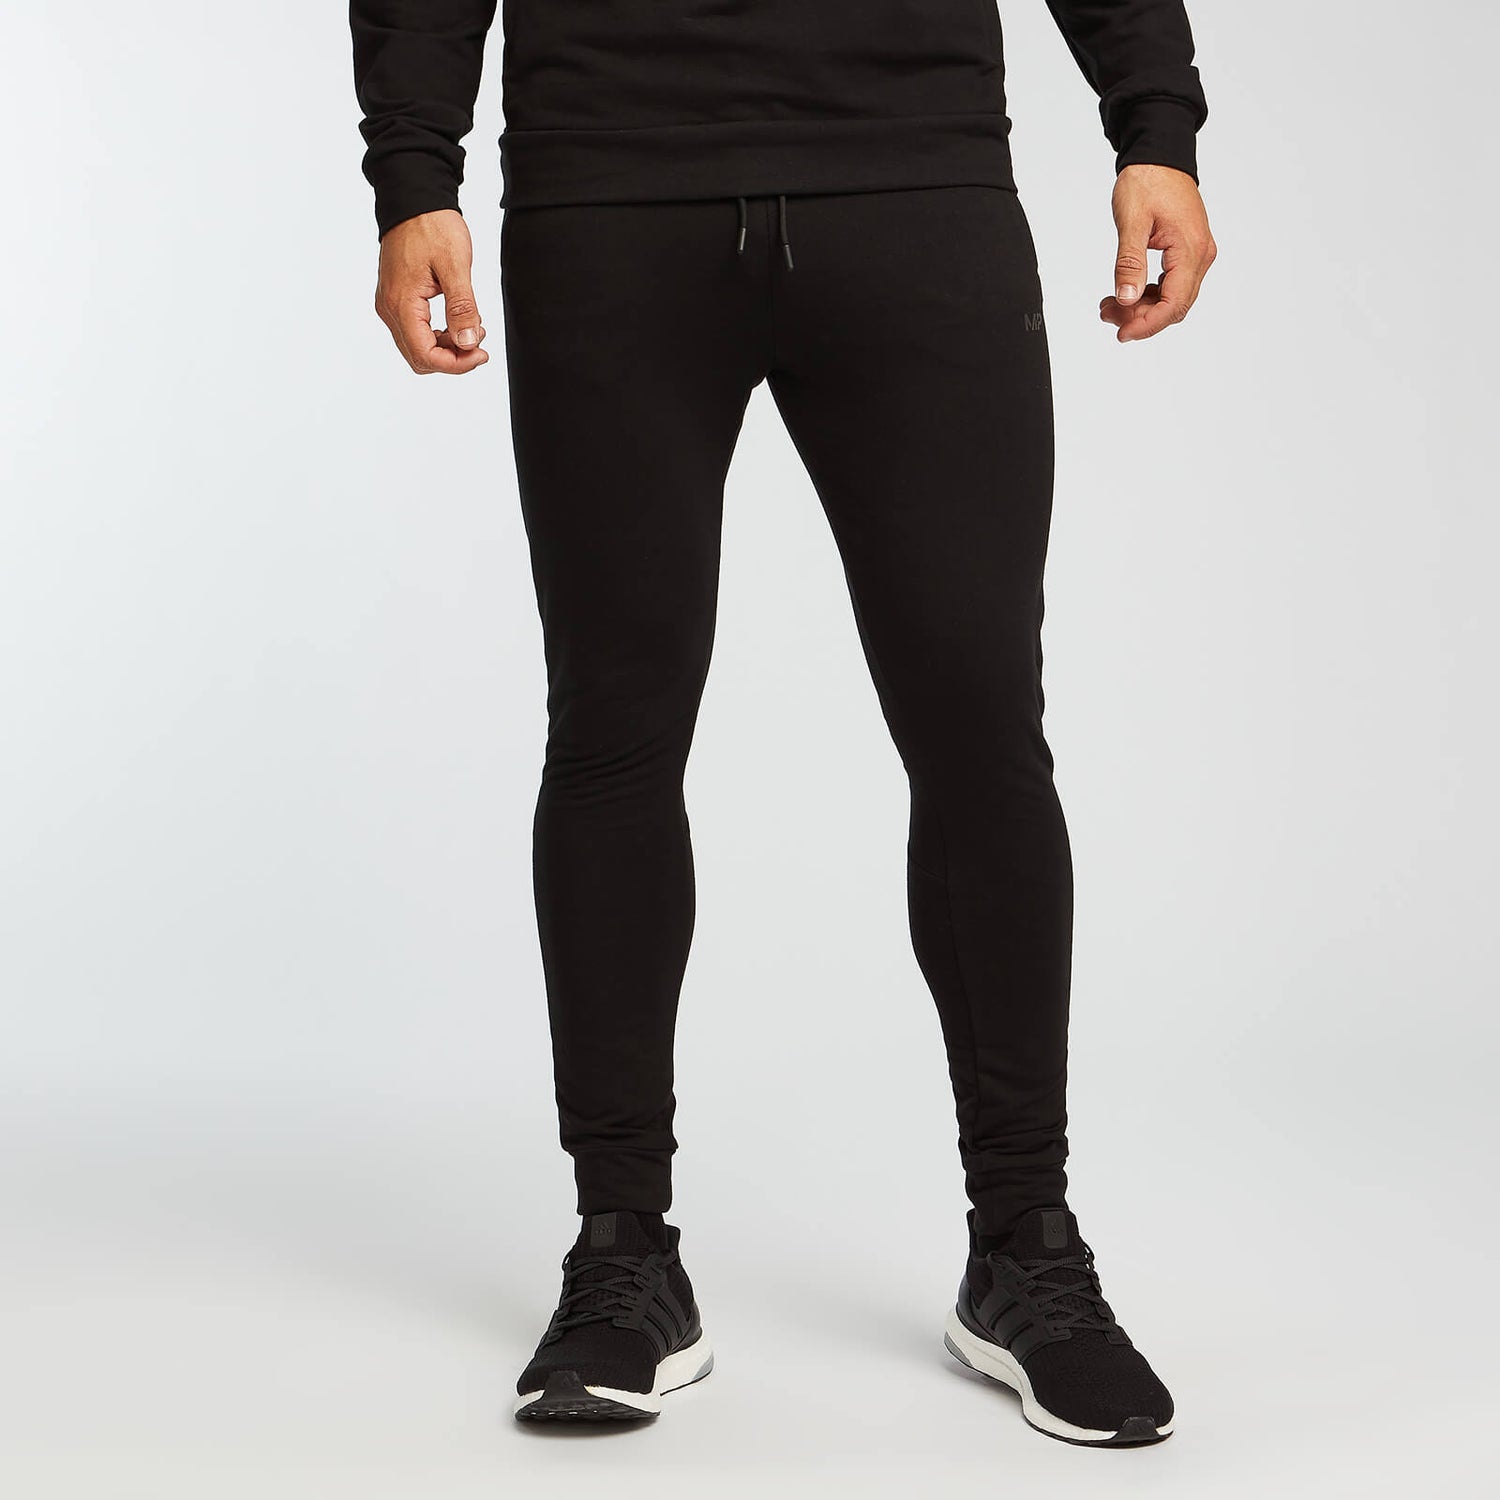 Pantaloni jogger slim fit MP Form pentru bărbați - Negru